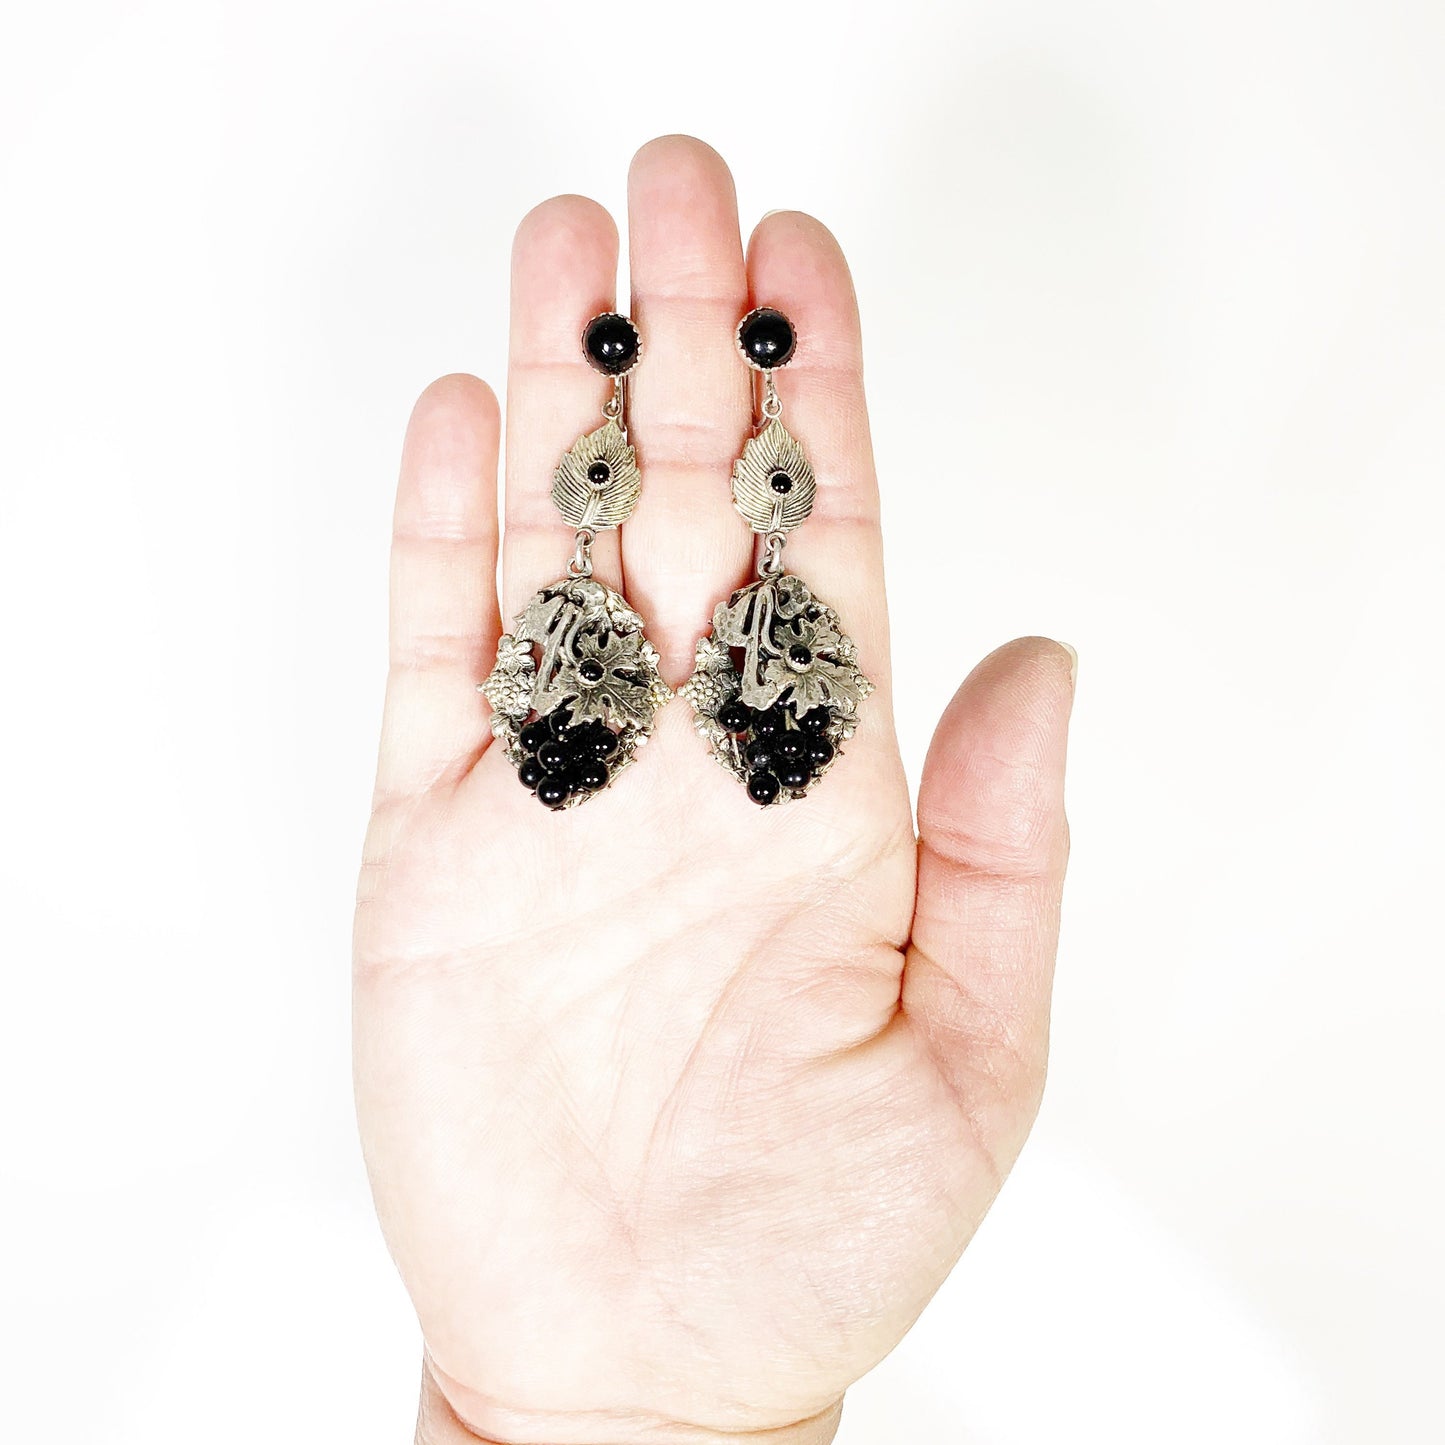 Vintage Silver Onyx Screw Back Earrings | Onyx Grape Fruit and Leaf Dangle Earrings